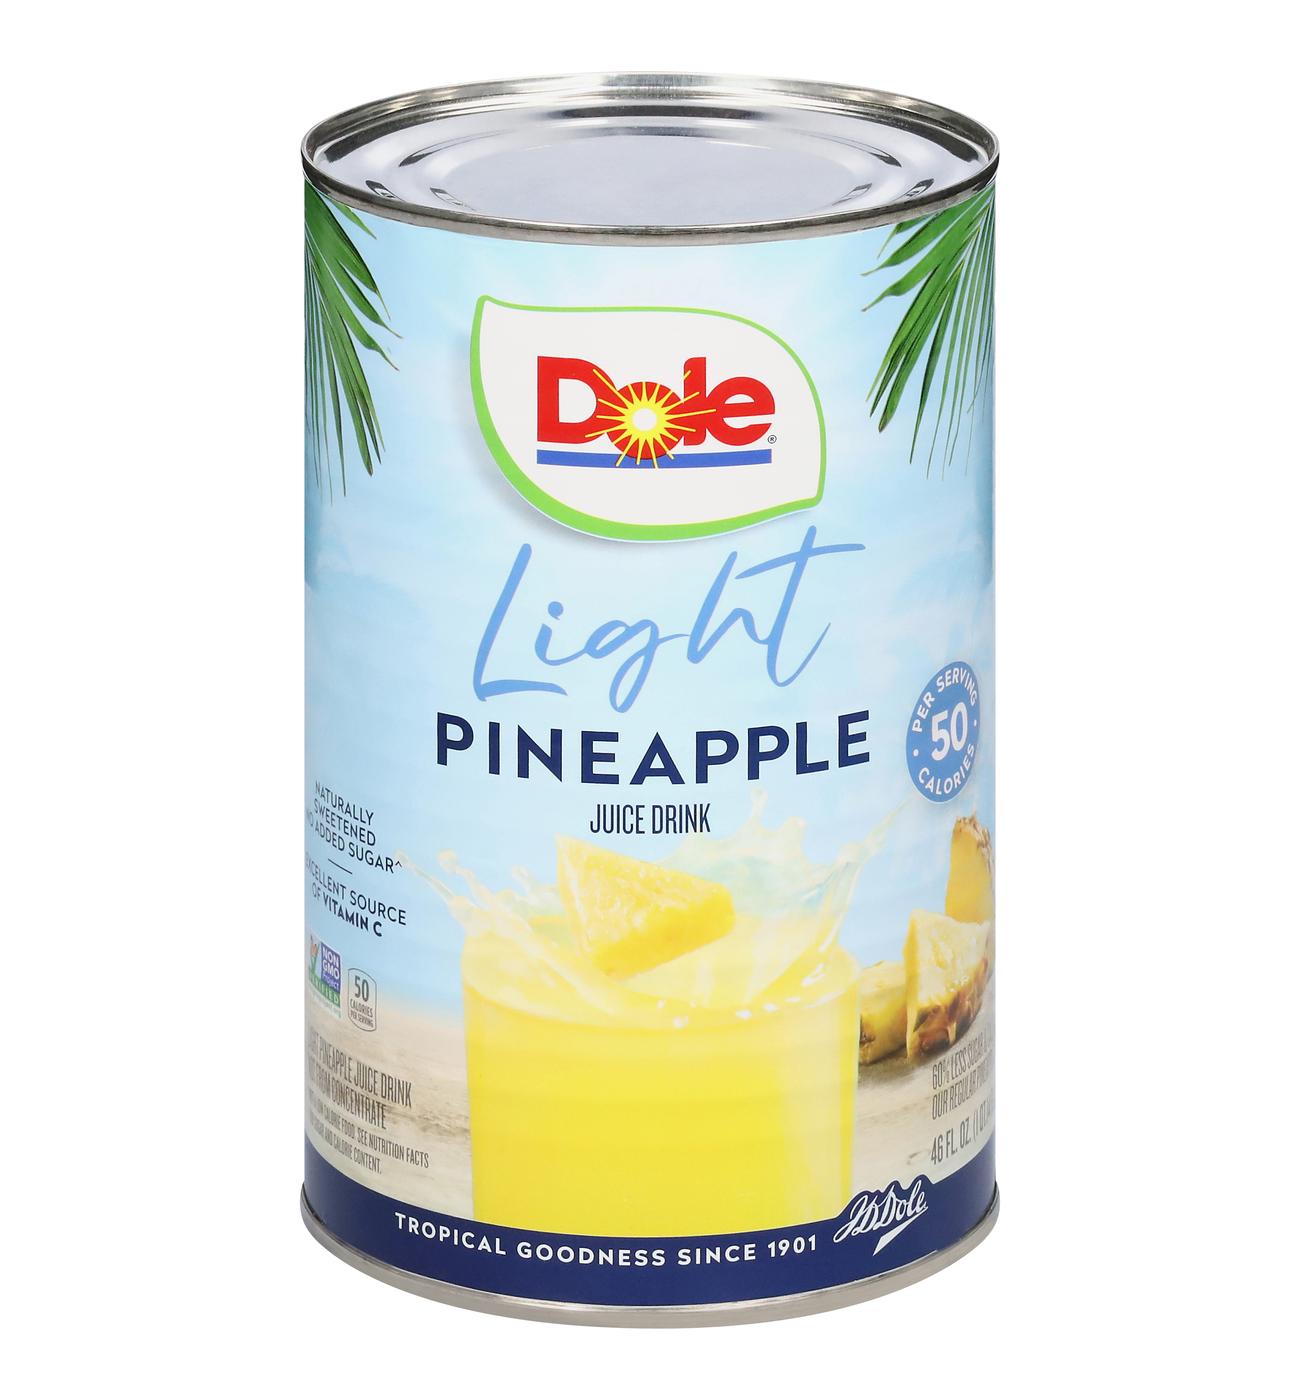 Dole Light Pineapple Juice Drink; image 1 of 4